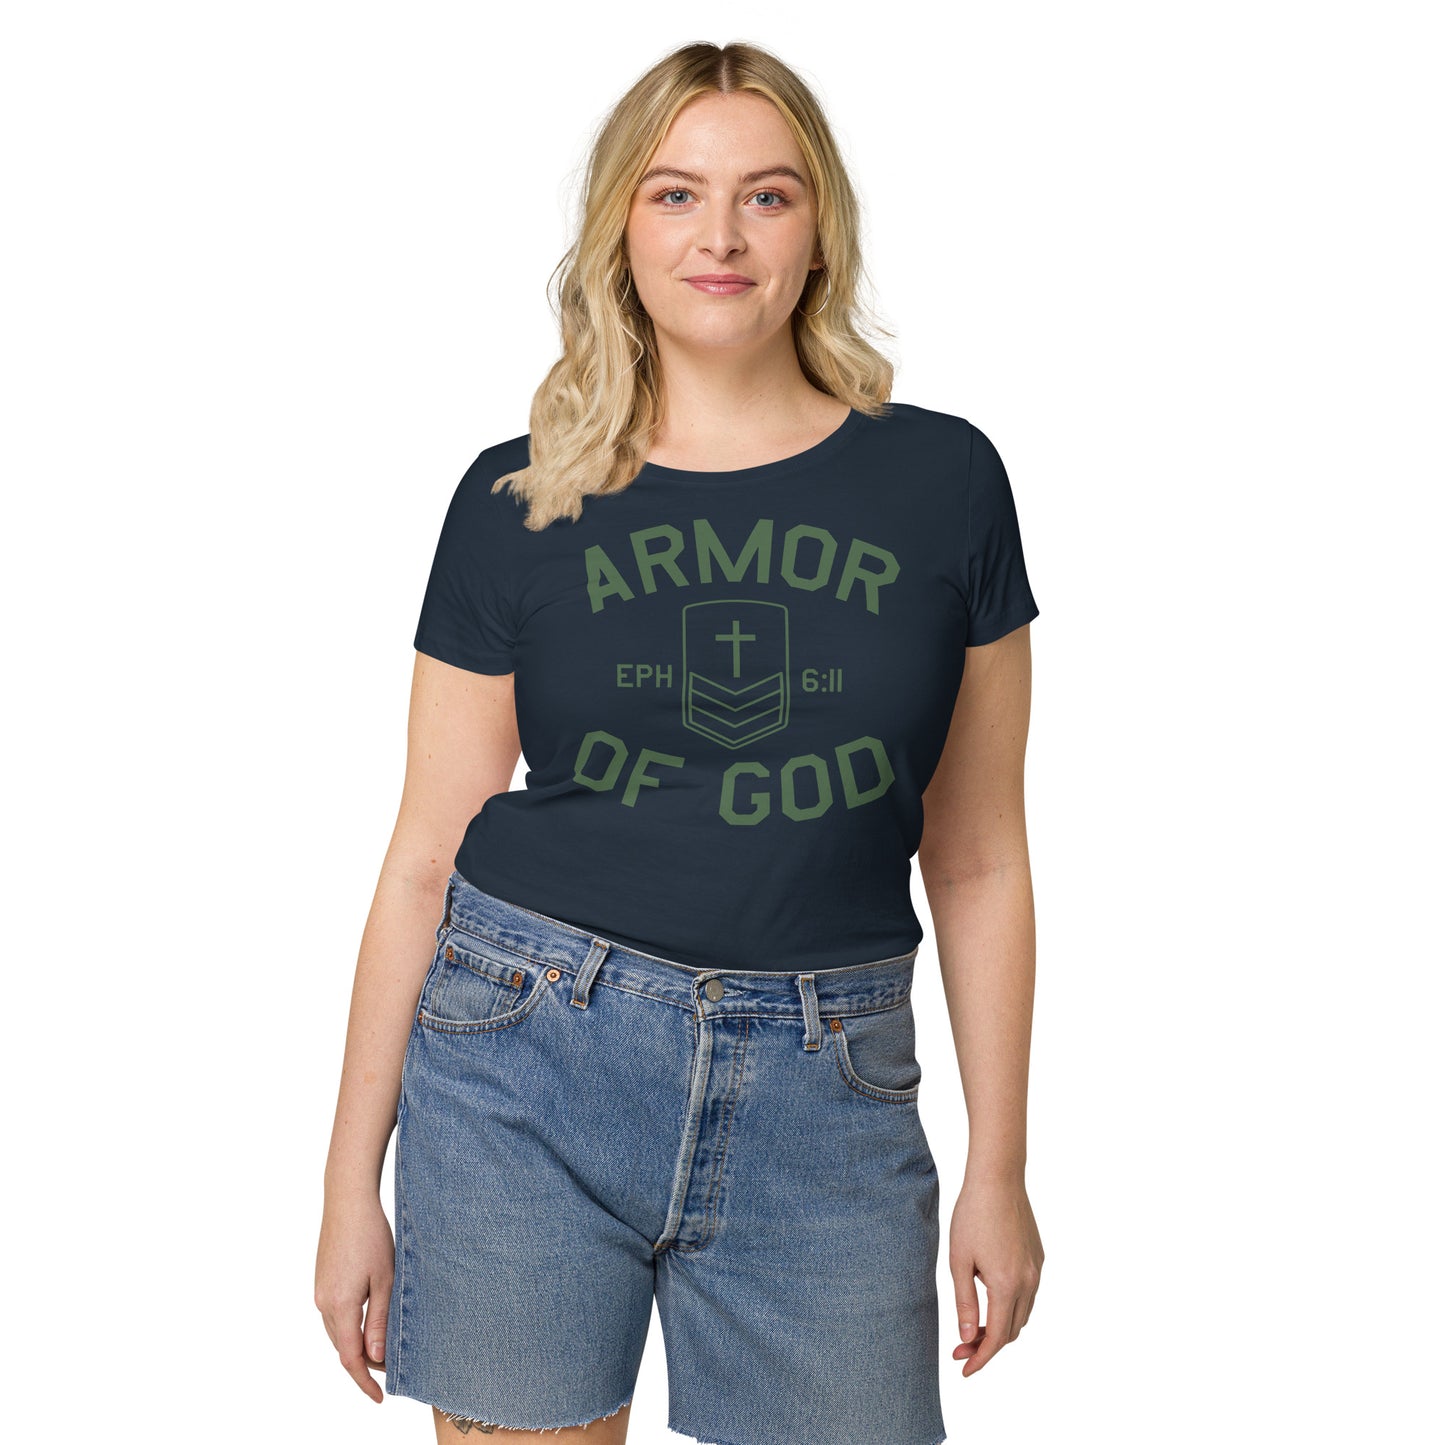 Armor of God Women’s basic organic t-shirt